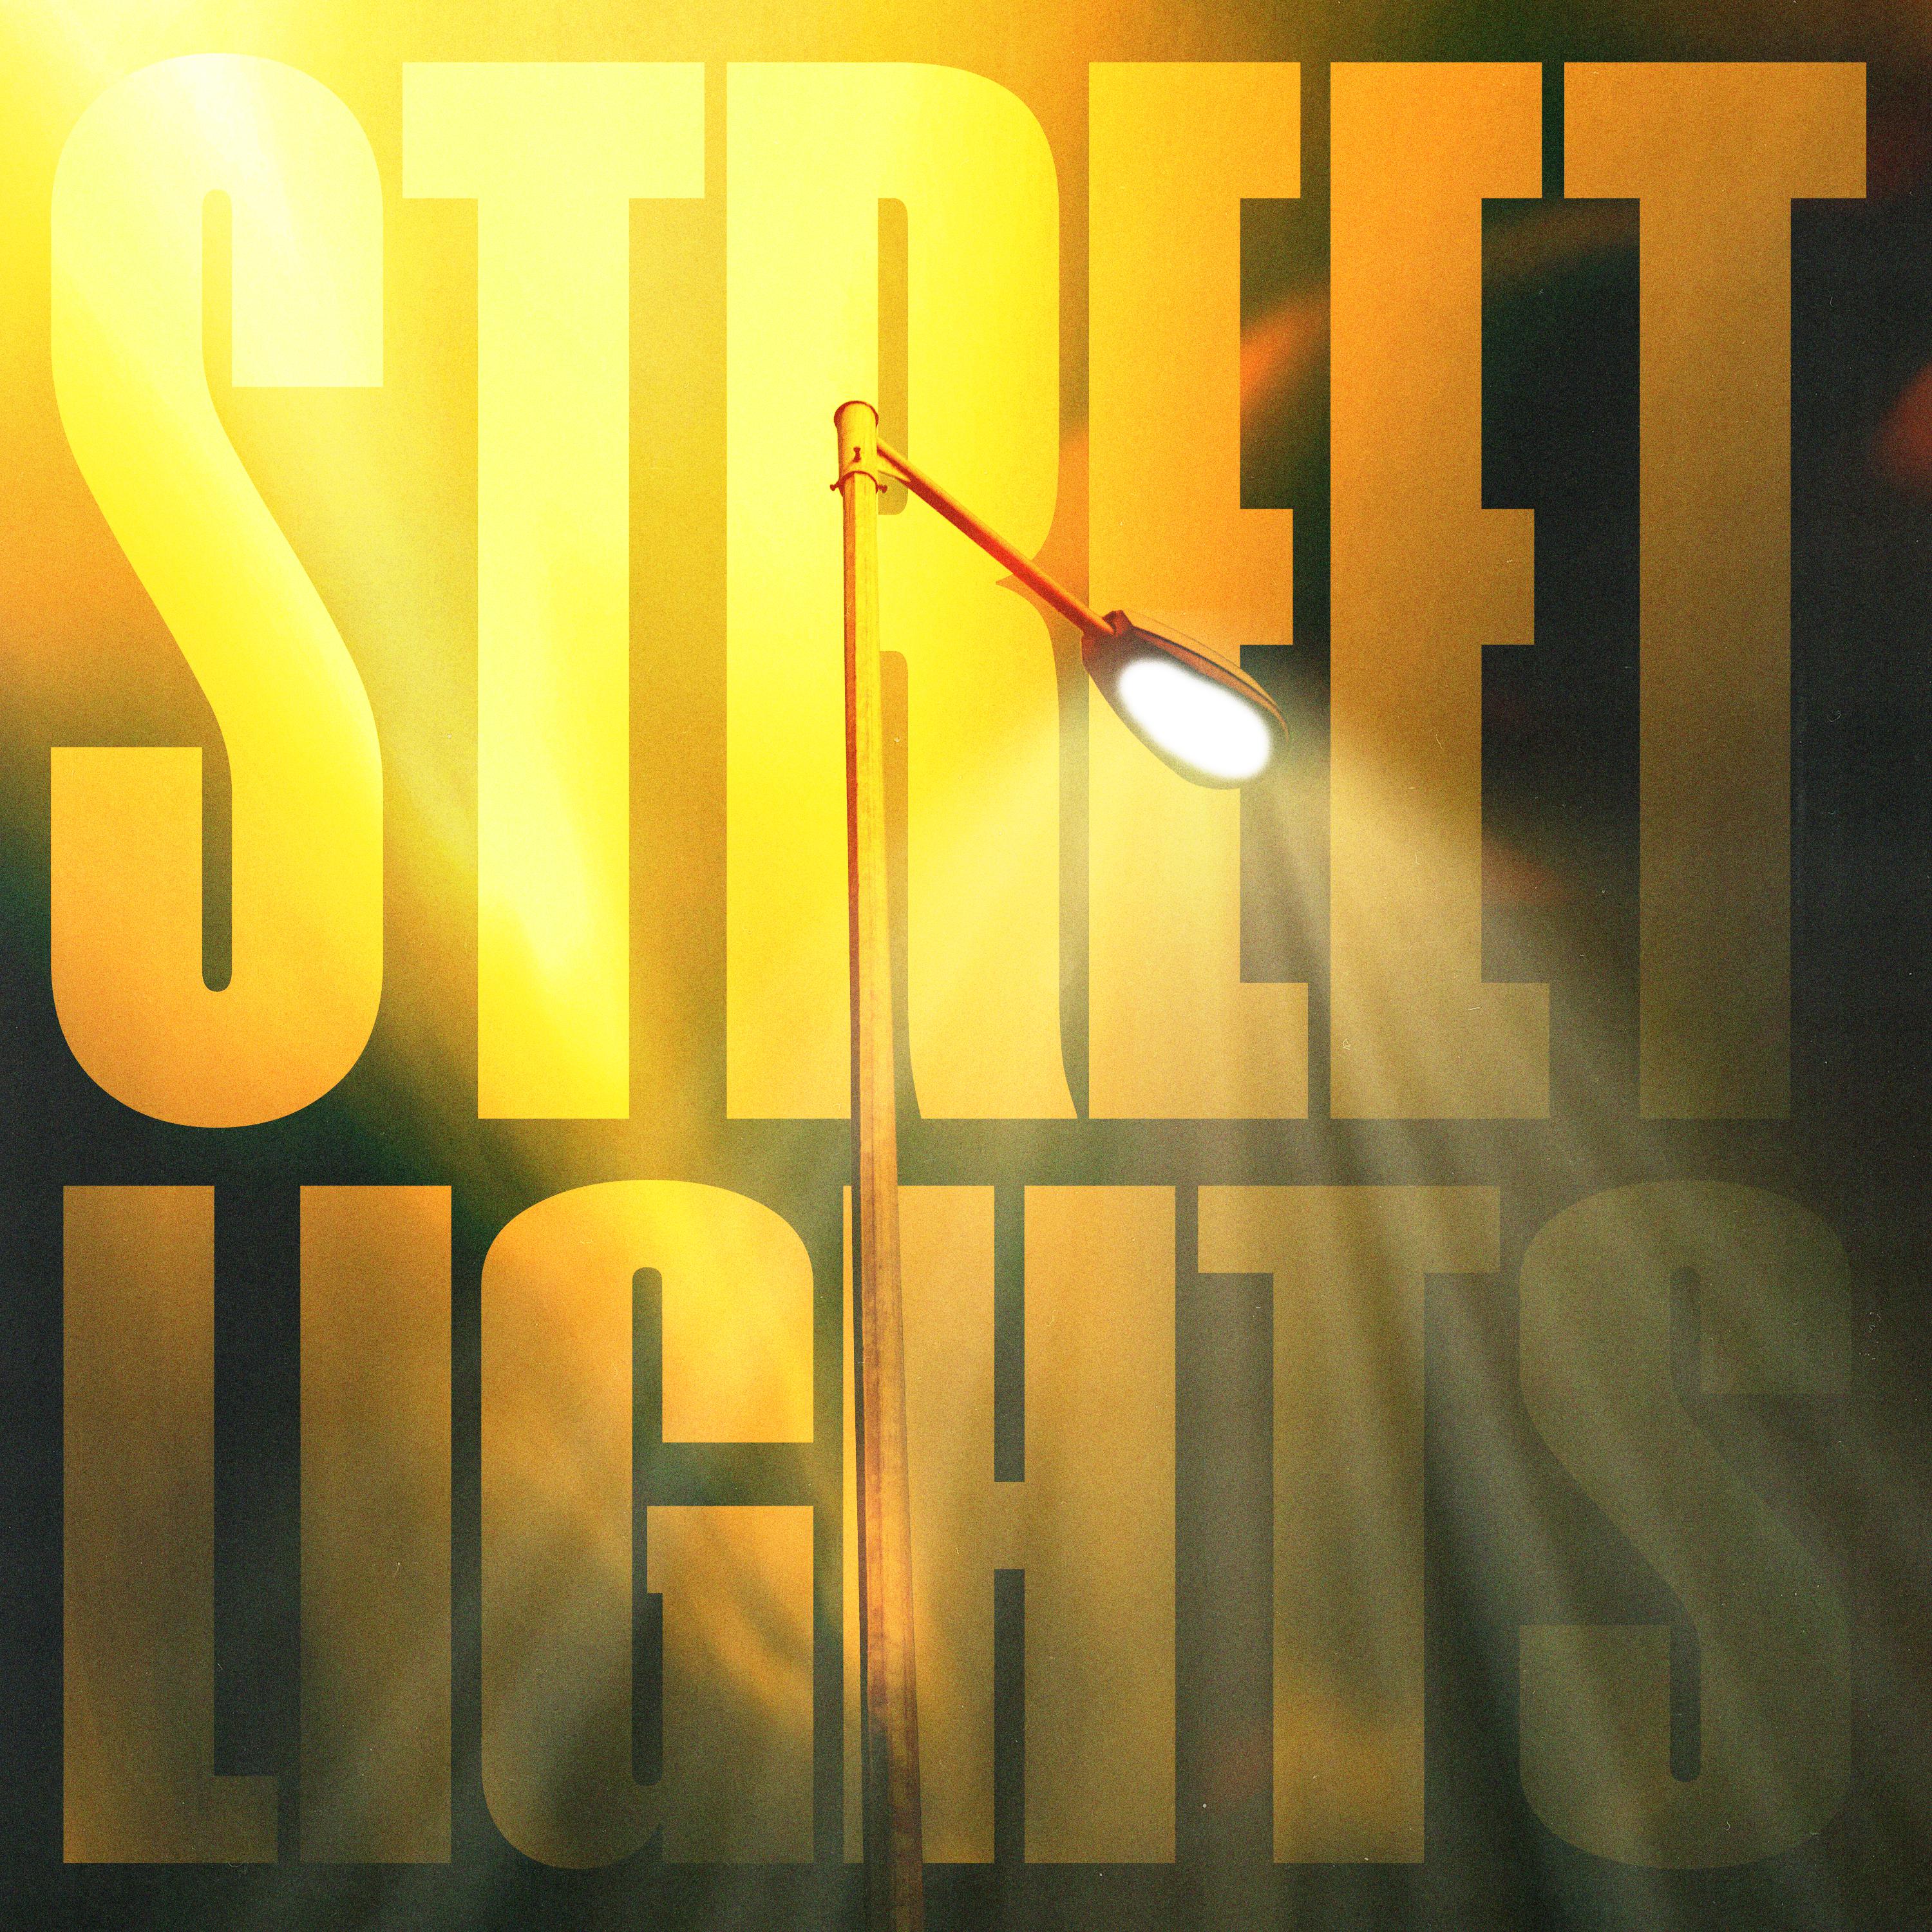 DJ Odie1 - Street Lights